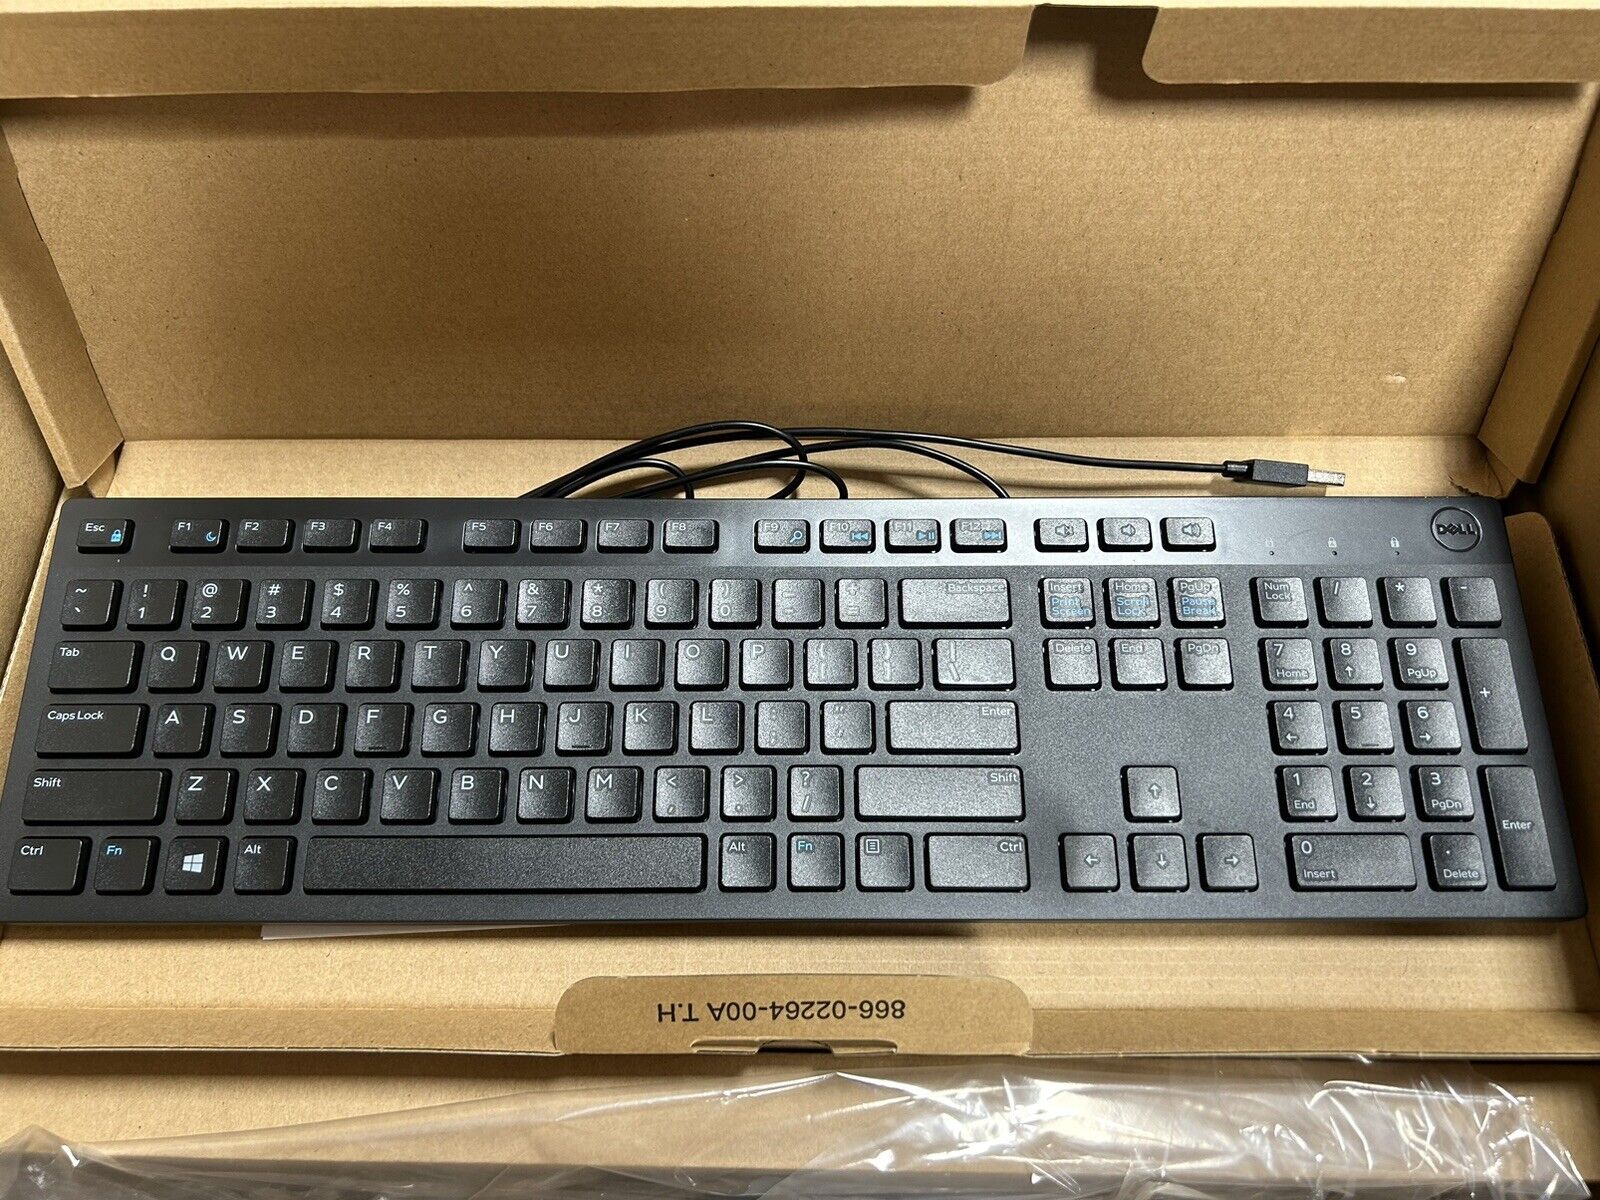 Dell KB216-BK-US Wired Keyboard - Black 10-pack